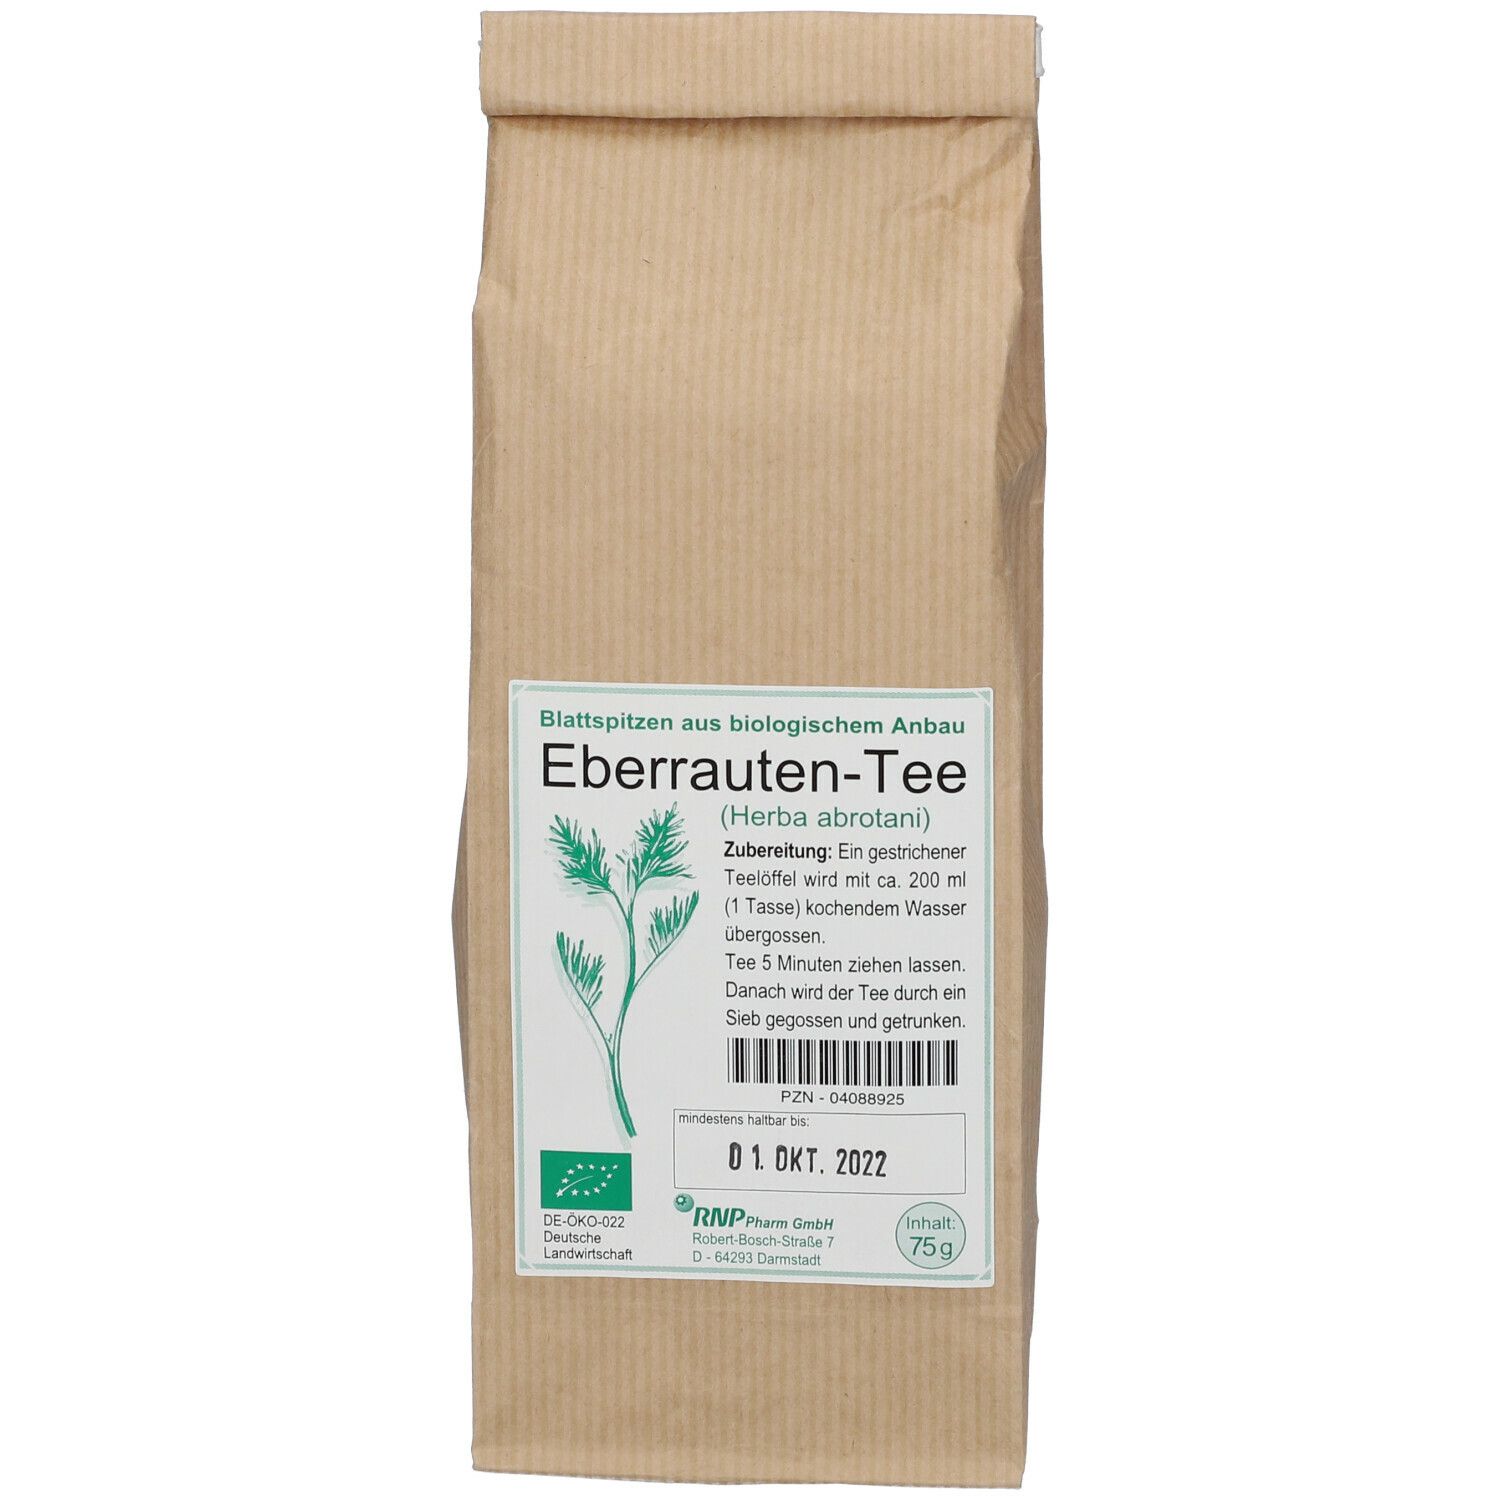 no brand Eberrauten-Tee Bioware